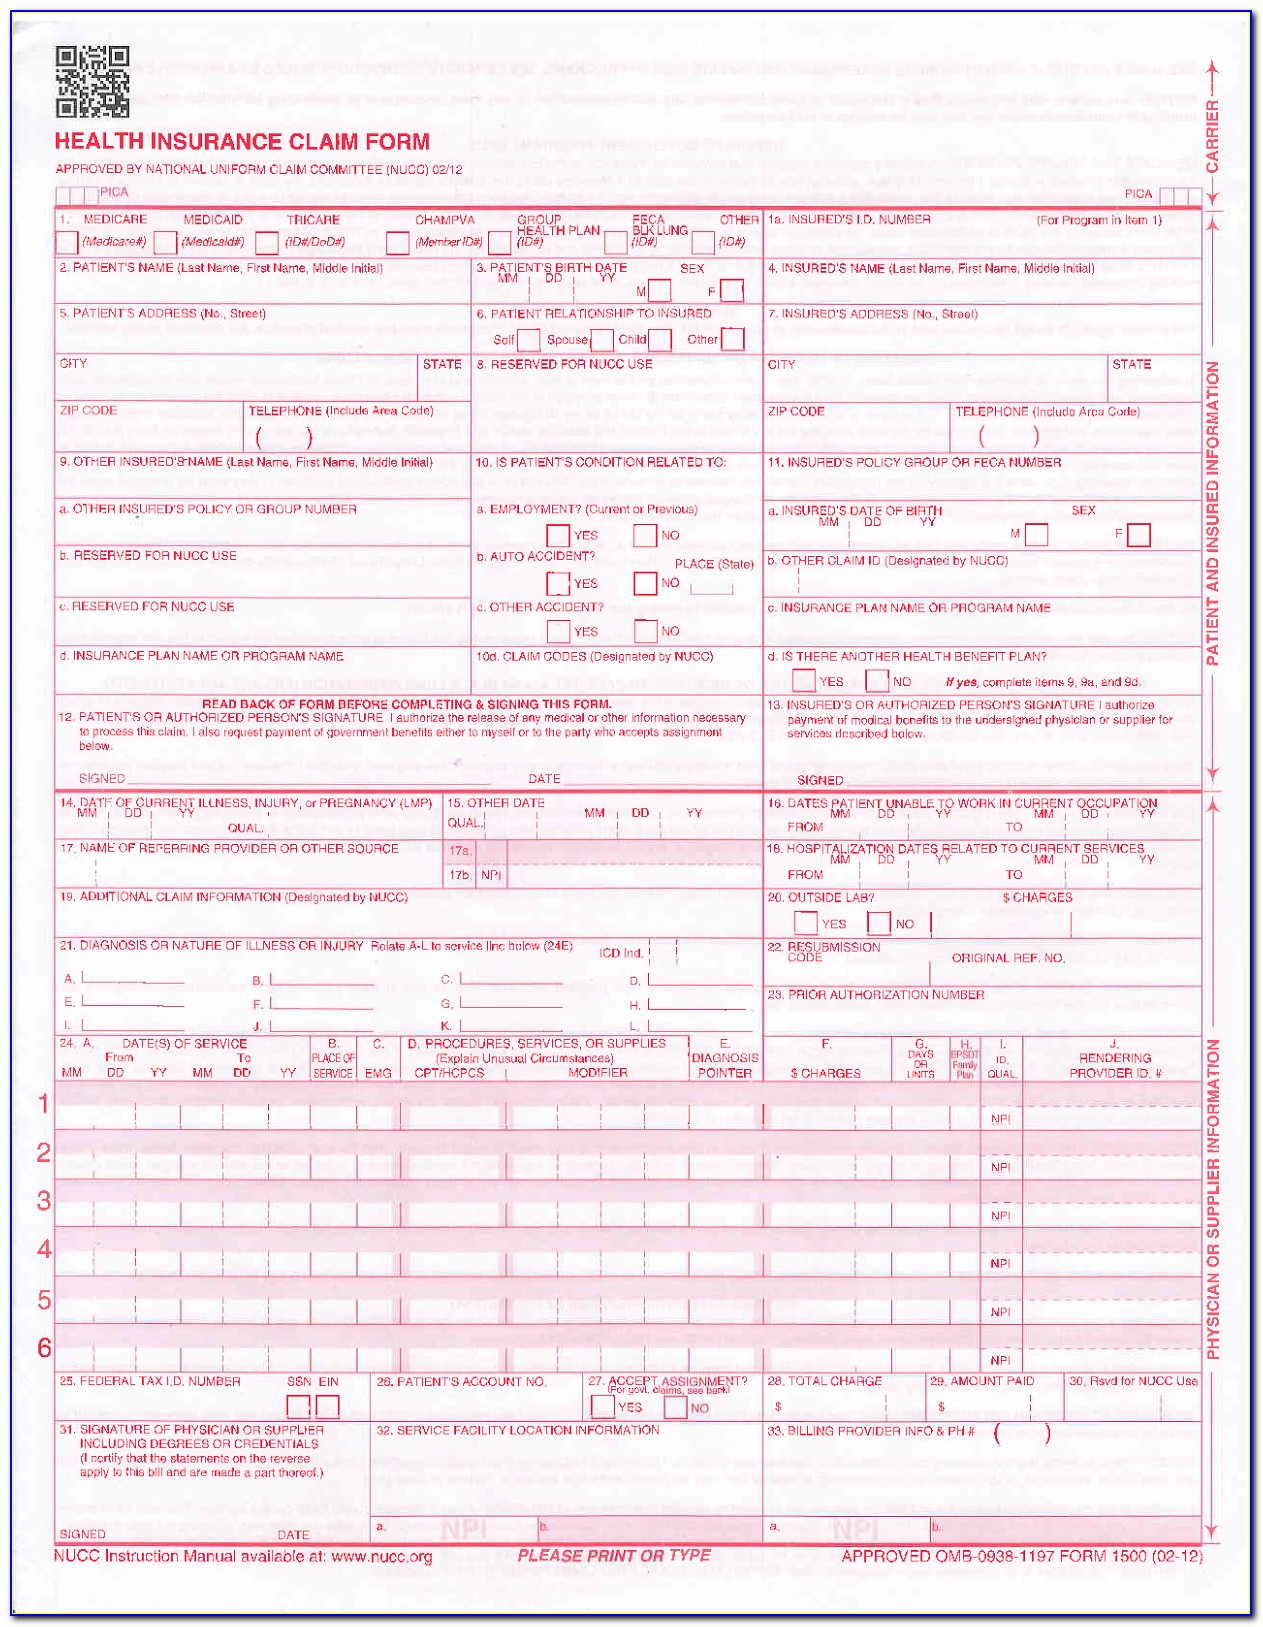 Free Cms 1500 Form Printable